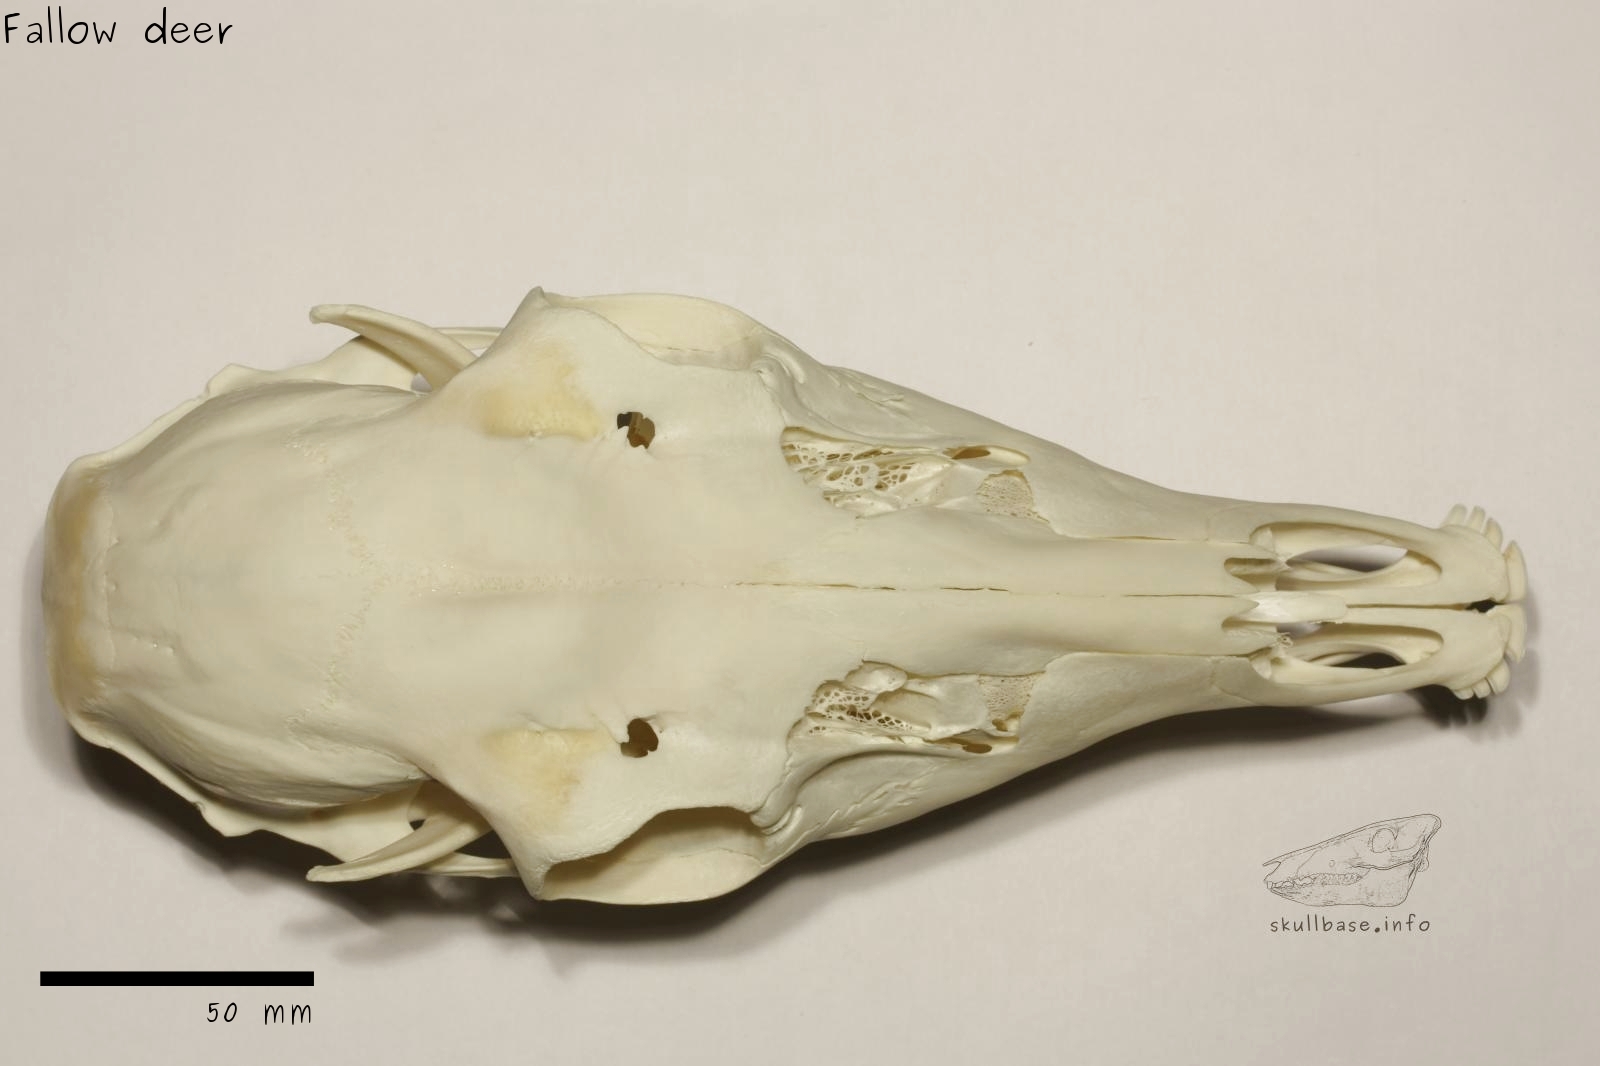 Fallow deer (Dama dama) skull dorsal view